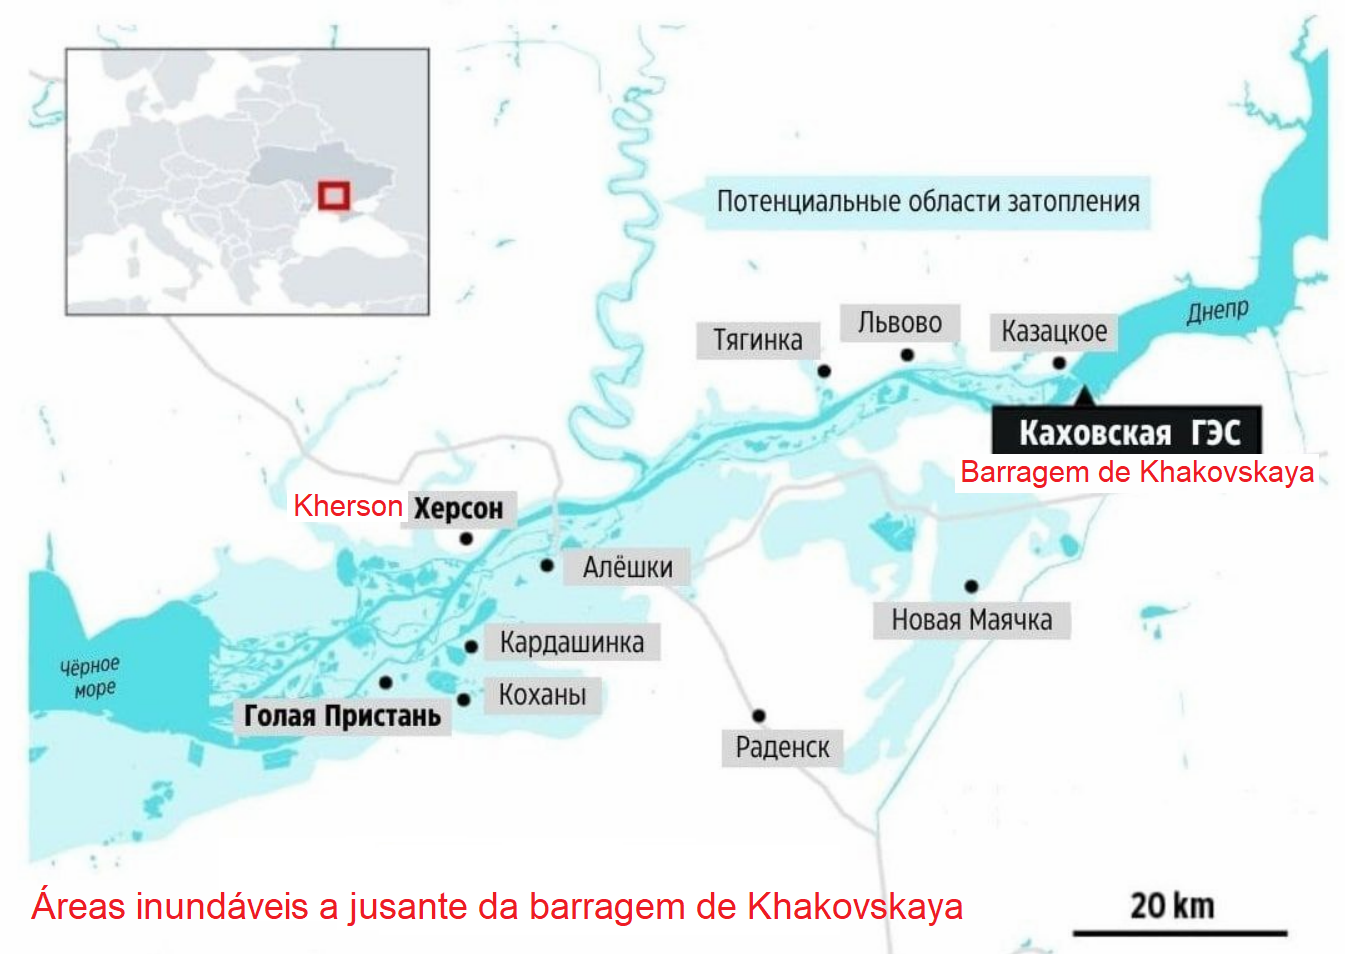 Áreas inundáveis a jusante da barragem de Khakovskaya.